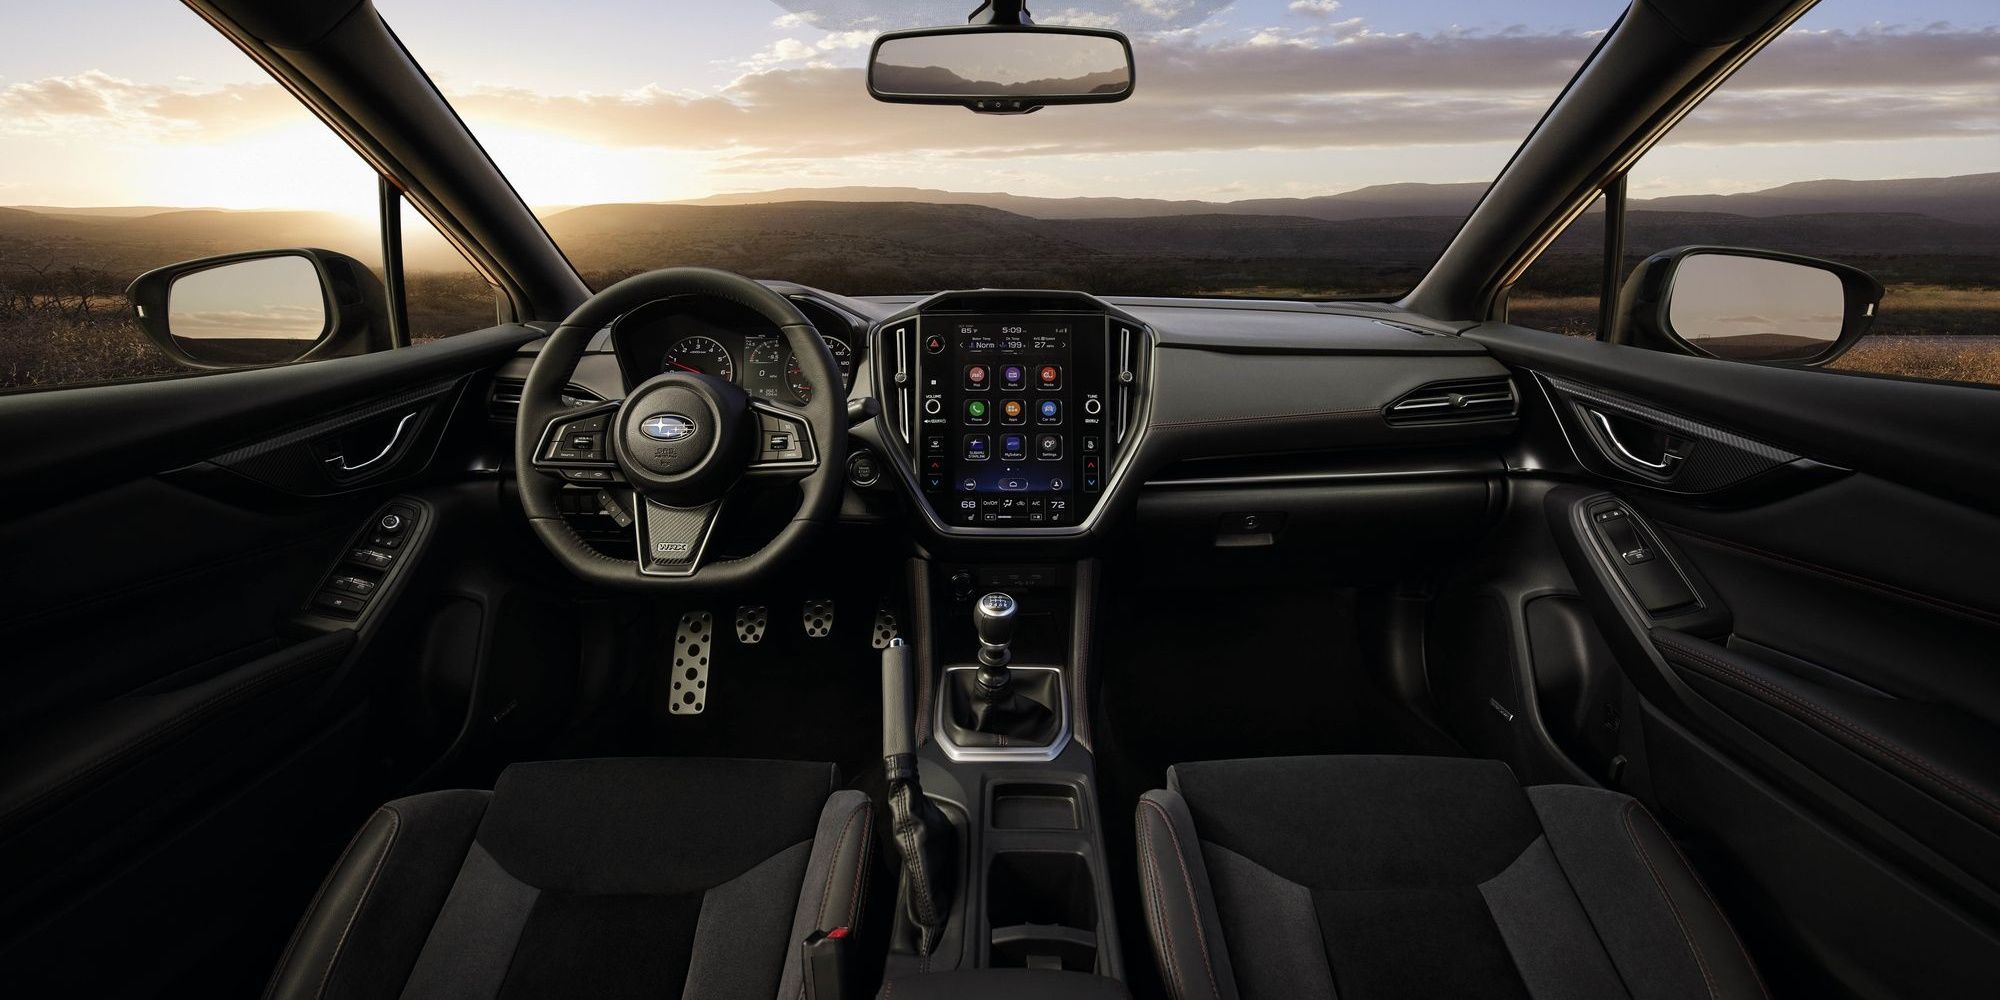 2022 Subaru WRX interior and infotainment